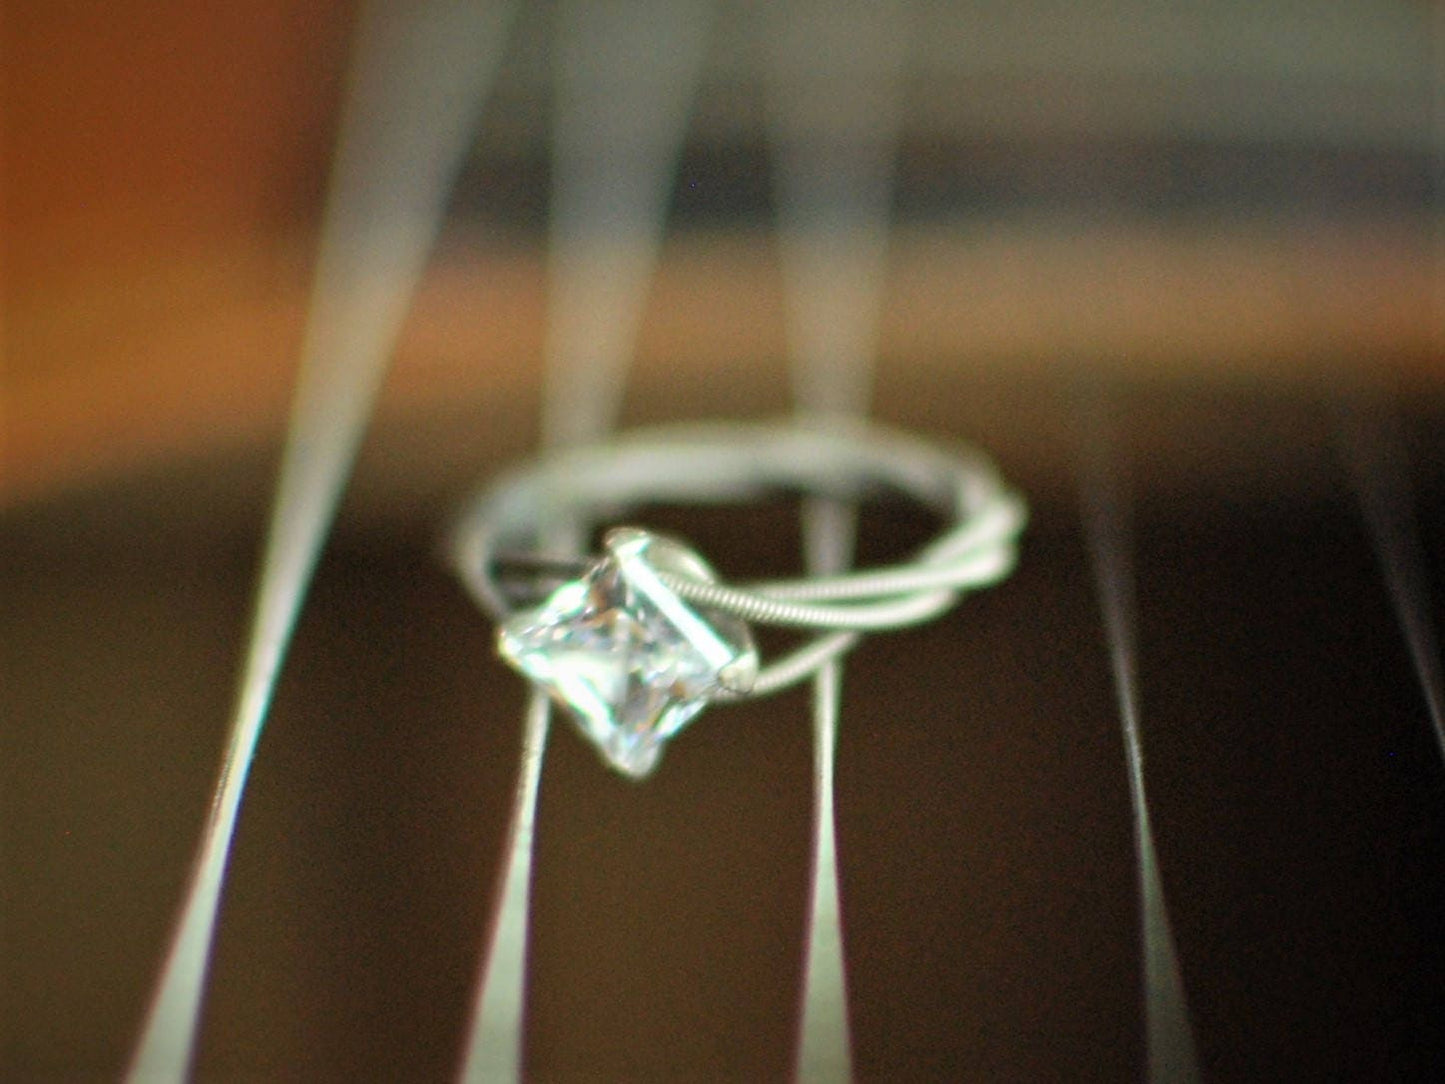 Guitar String Engagement Ring, Princess Cut Engagement Ring, Guitar String Jewelry, Unique Engagement Ring, Guitar Gifts, Wedding Ring